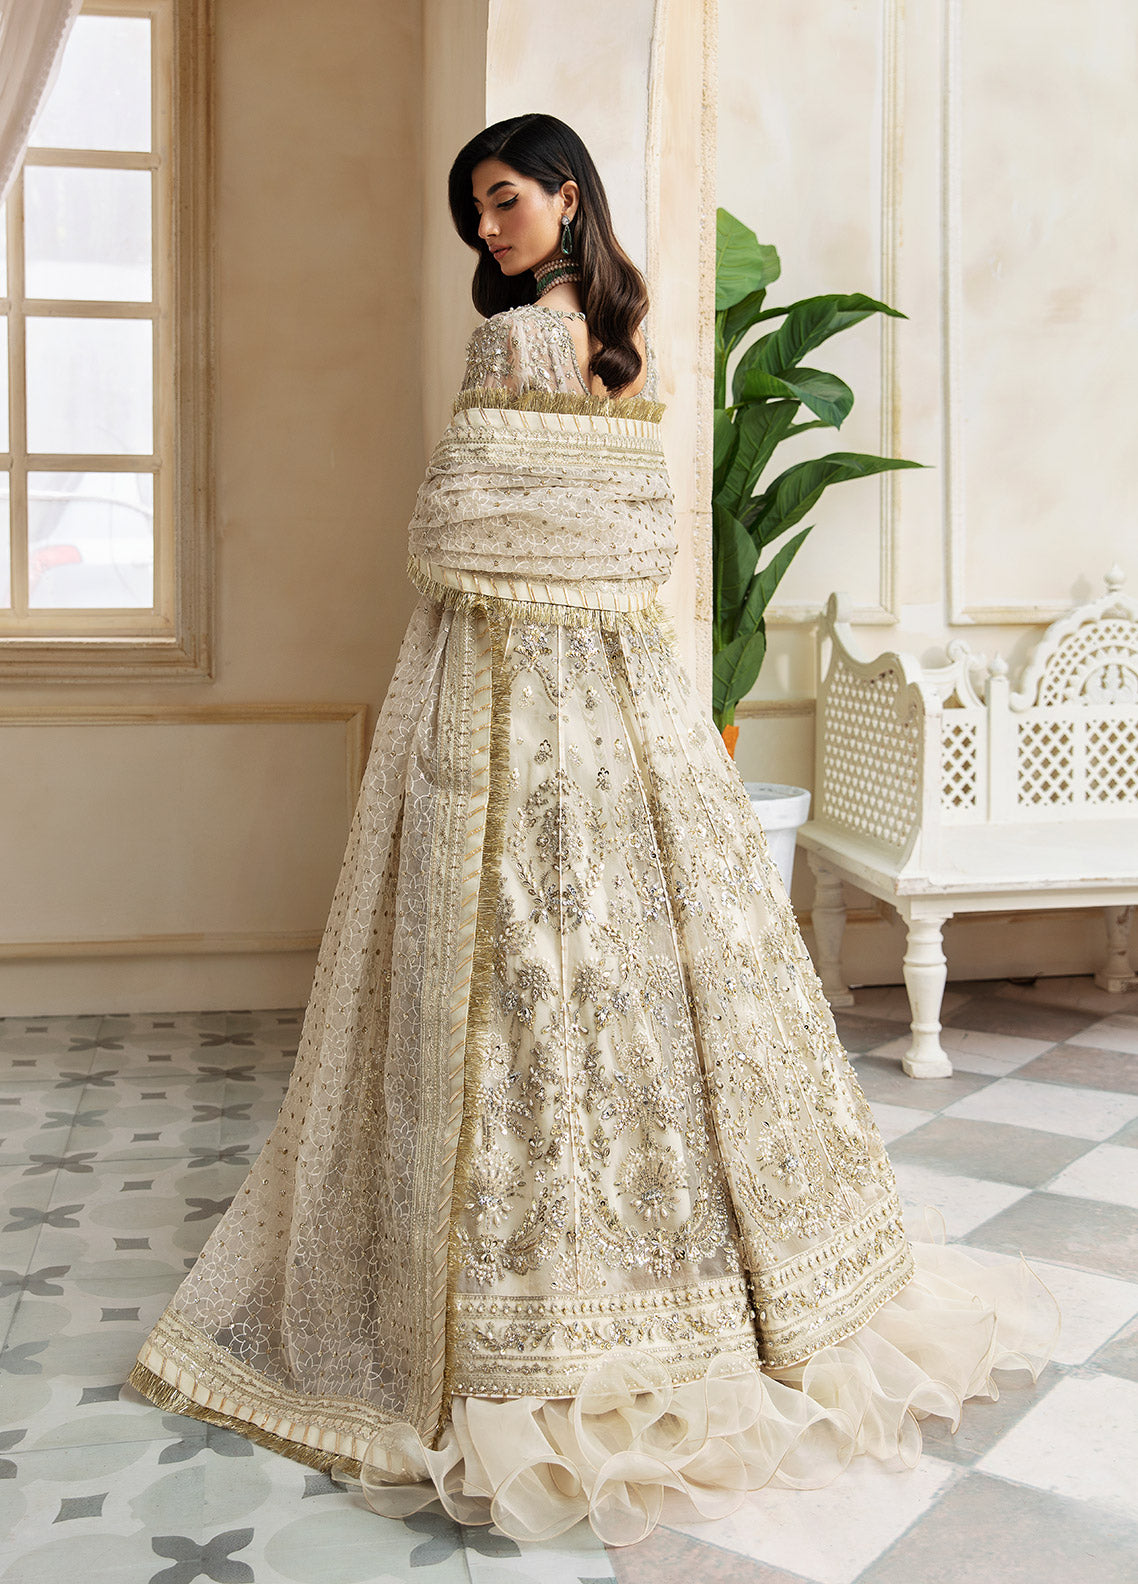 3 most affordable Pakistani bridal designers | by Aayzaaligillani | Medium